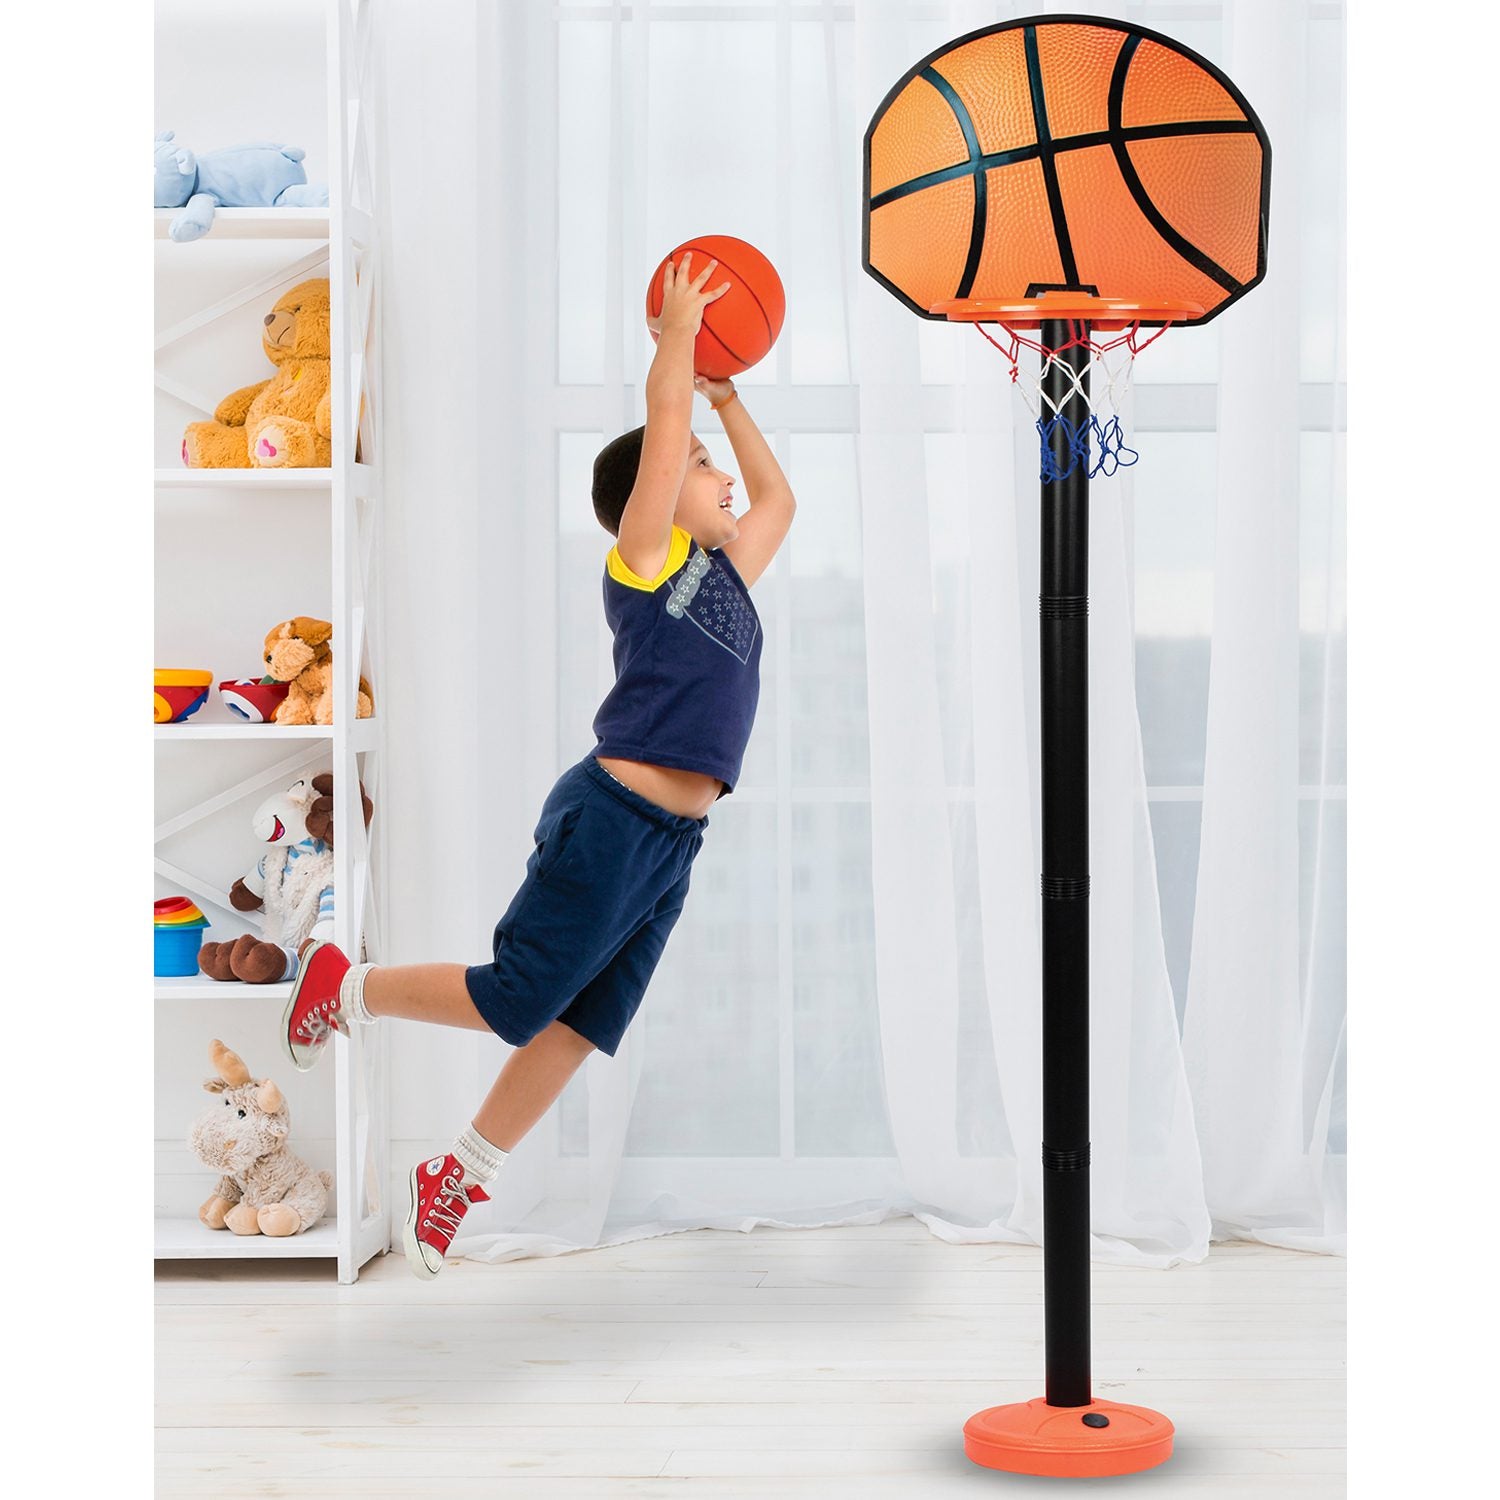 2 IN 1 Basket ball Adjustable for growing kids